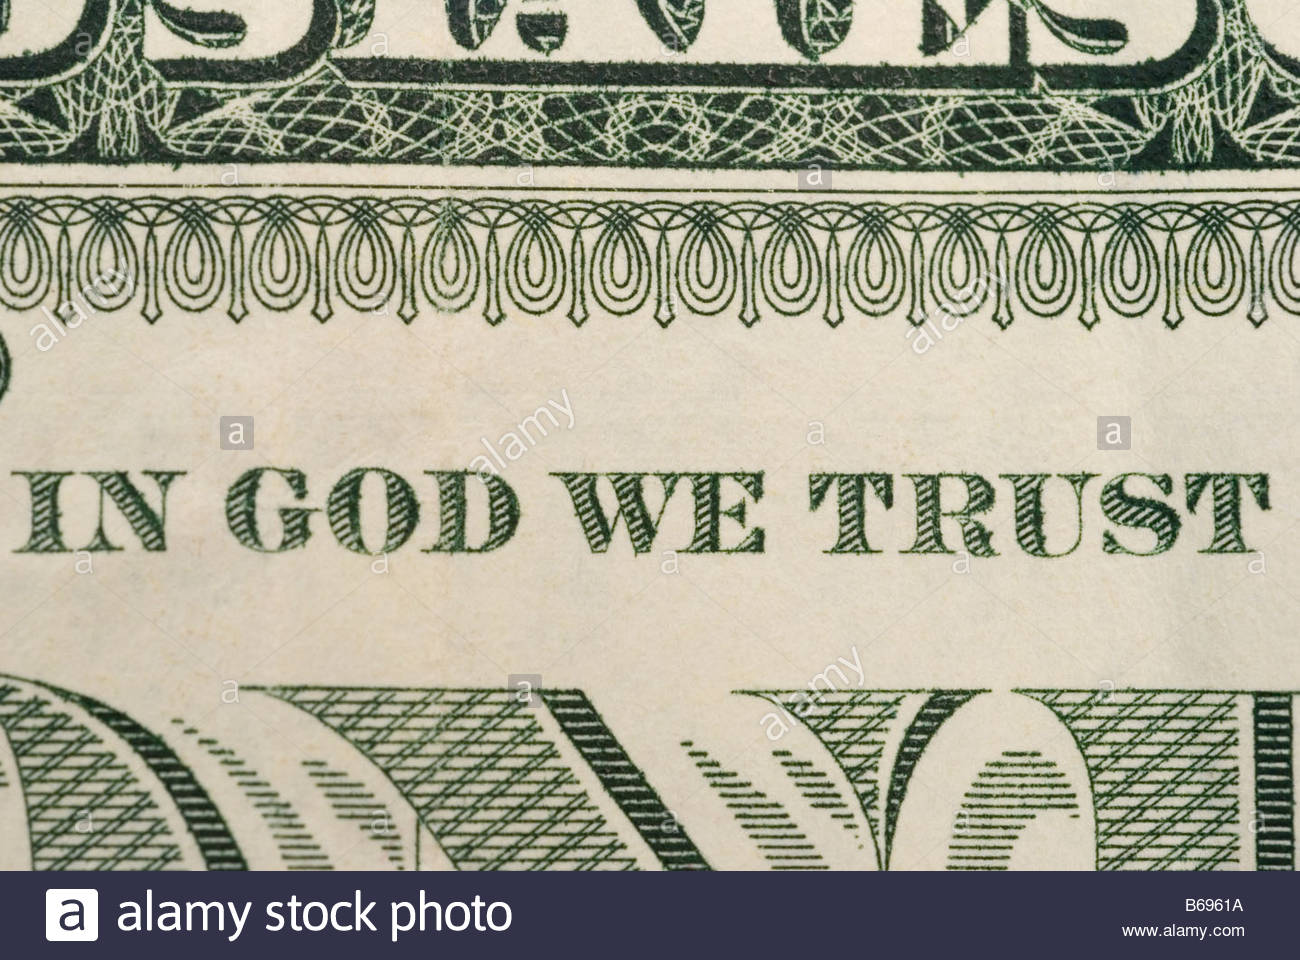 Переведи gods. In God we Trust на долларе. Надпись на долларе in God we Trust. In God we Trust перевод. In God we Trust на долларе перевод.